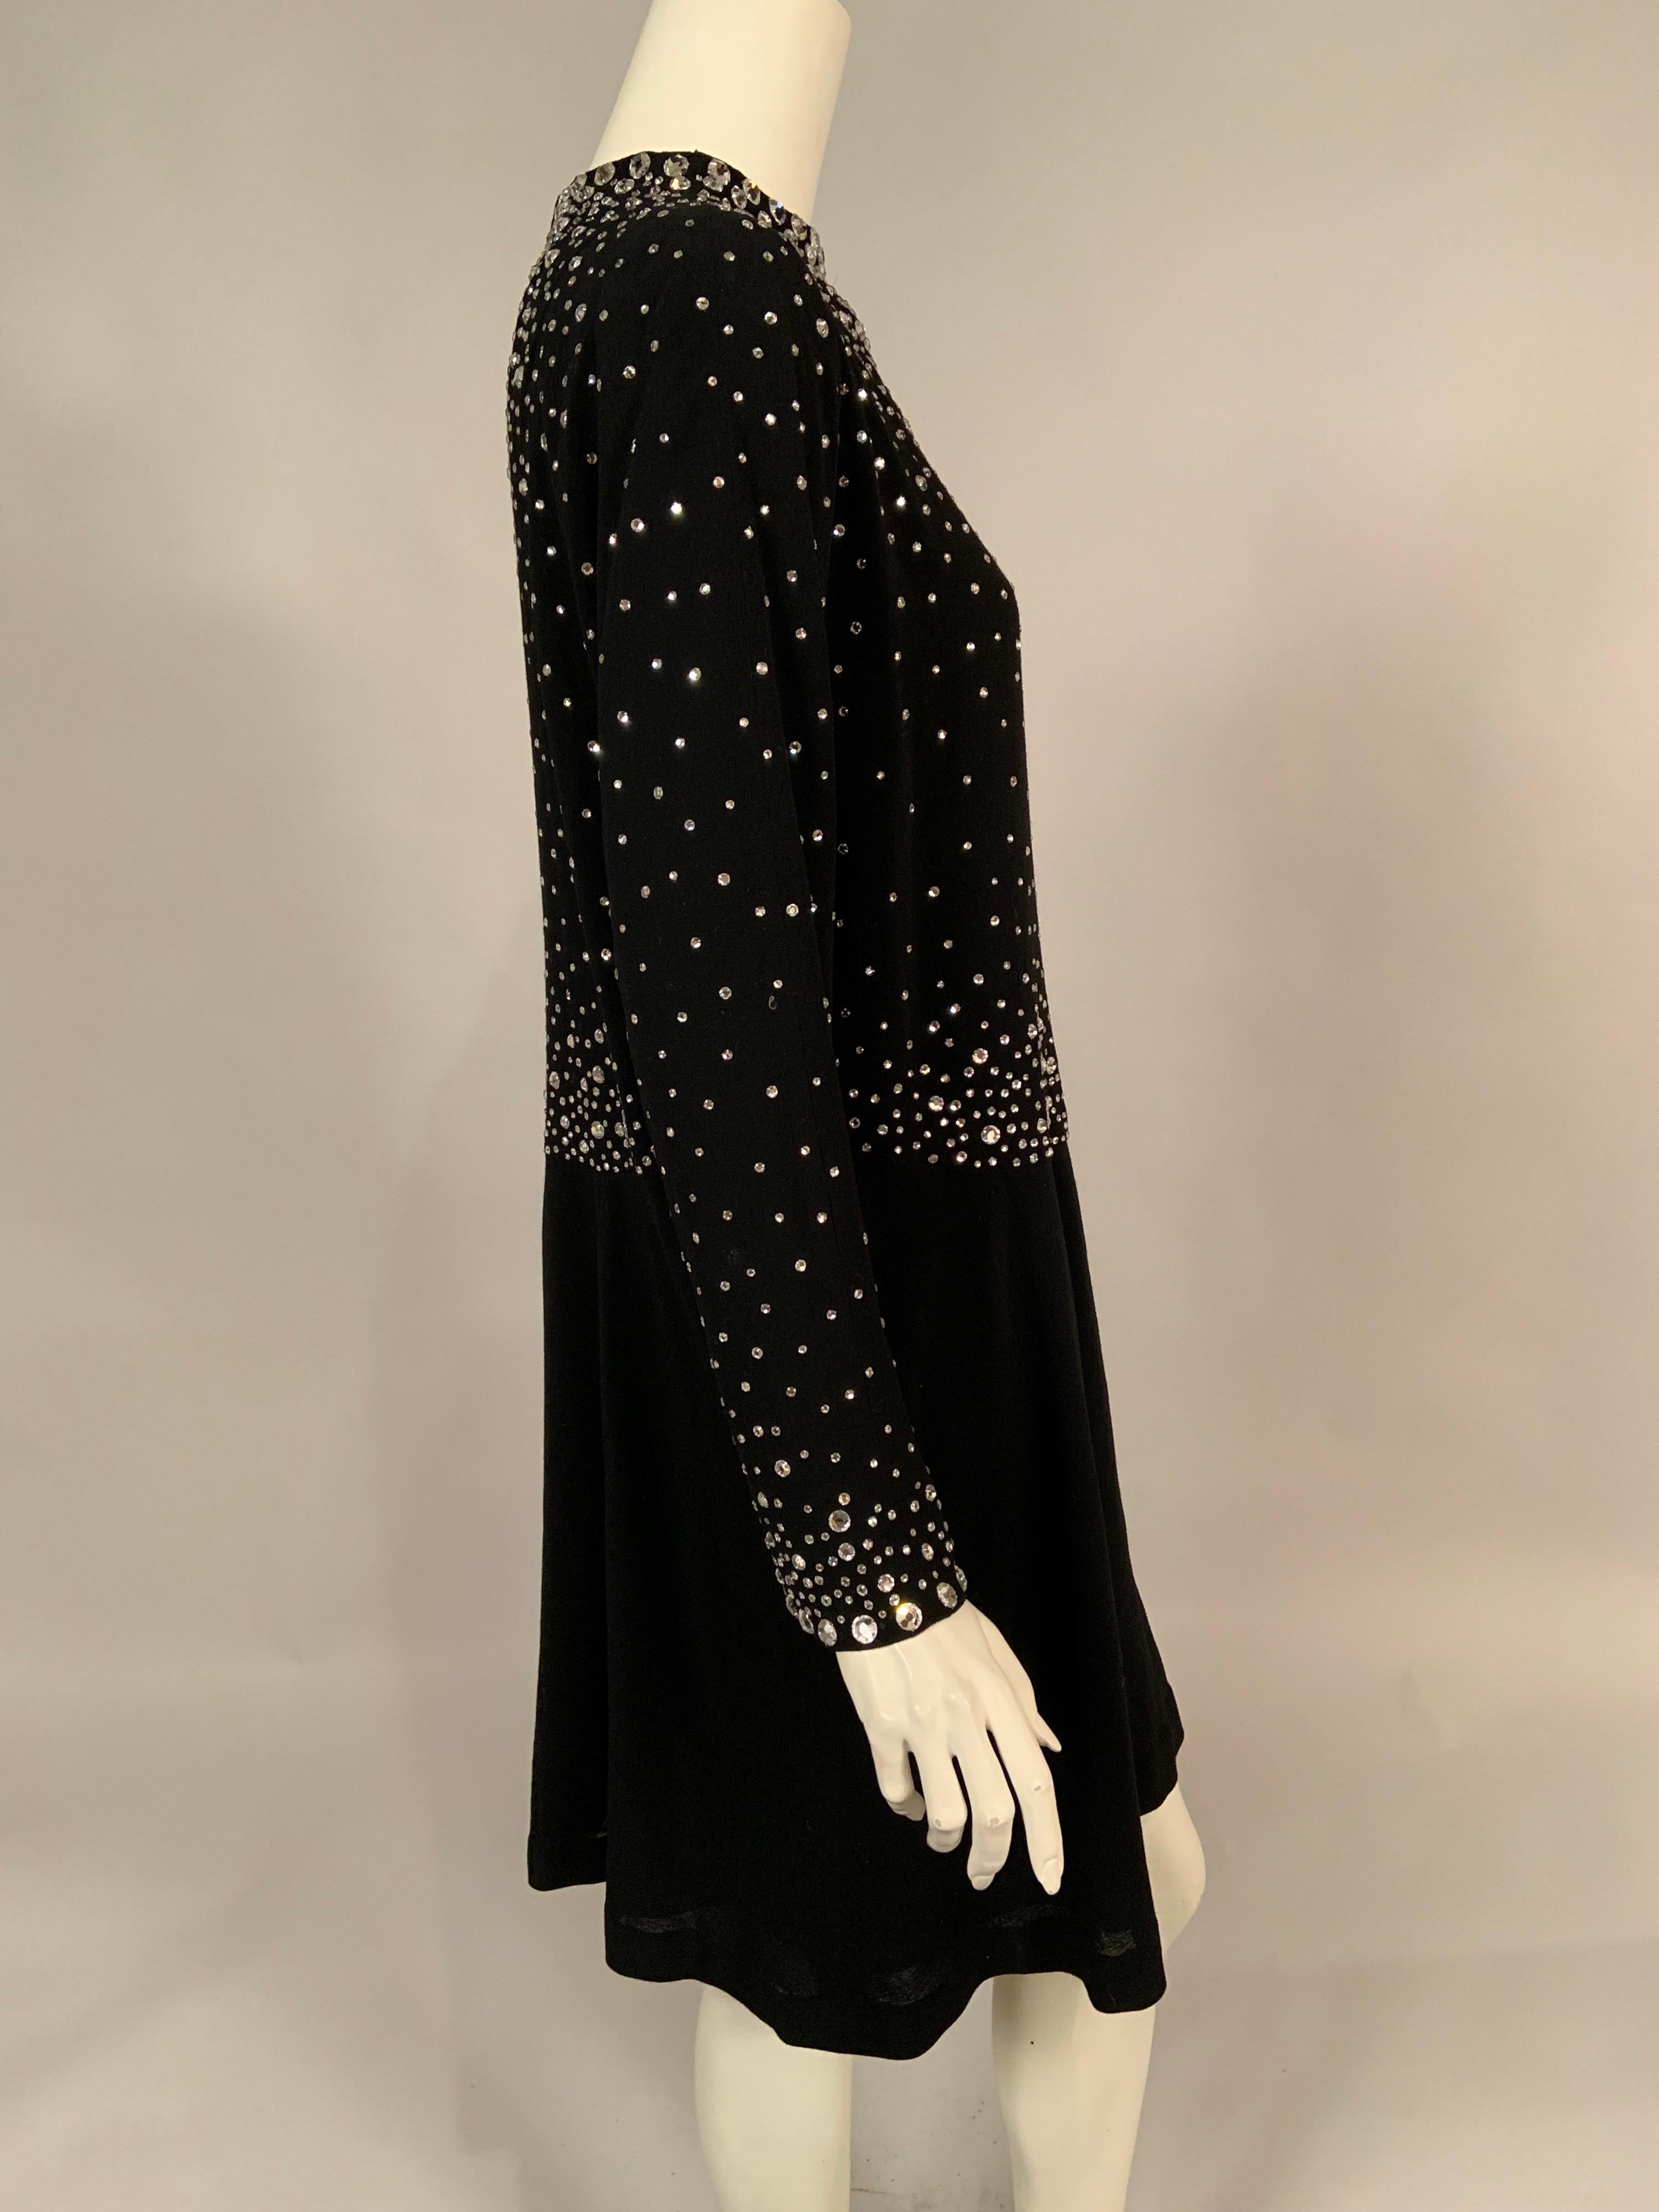 Pauline Trigere Black Wool Crepe Dress with Diamanté Studded Top Larger Size 2